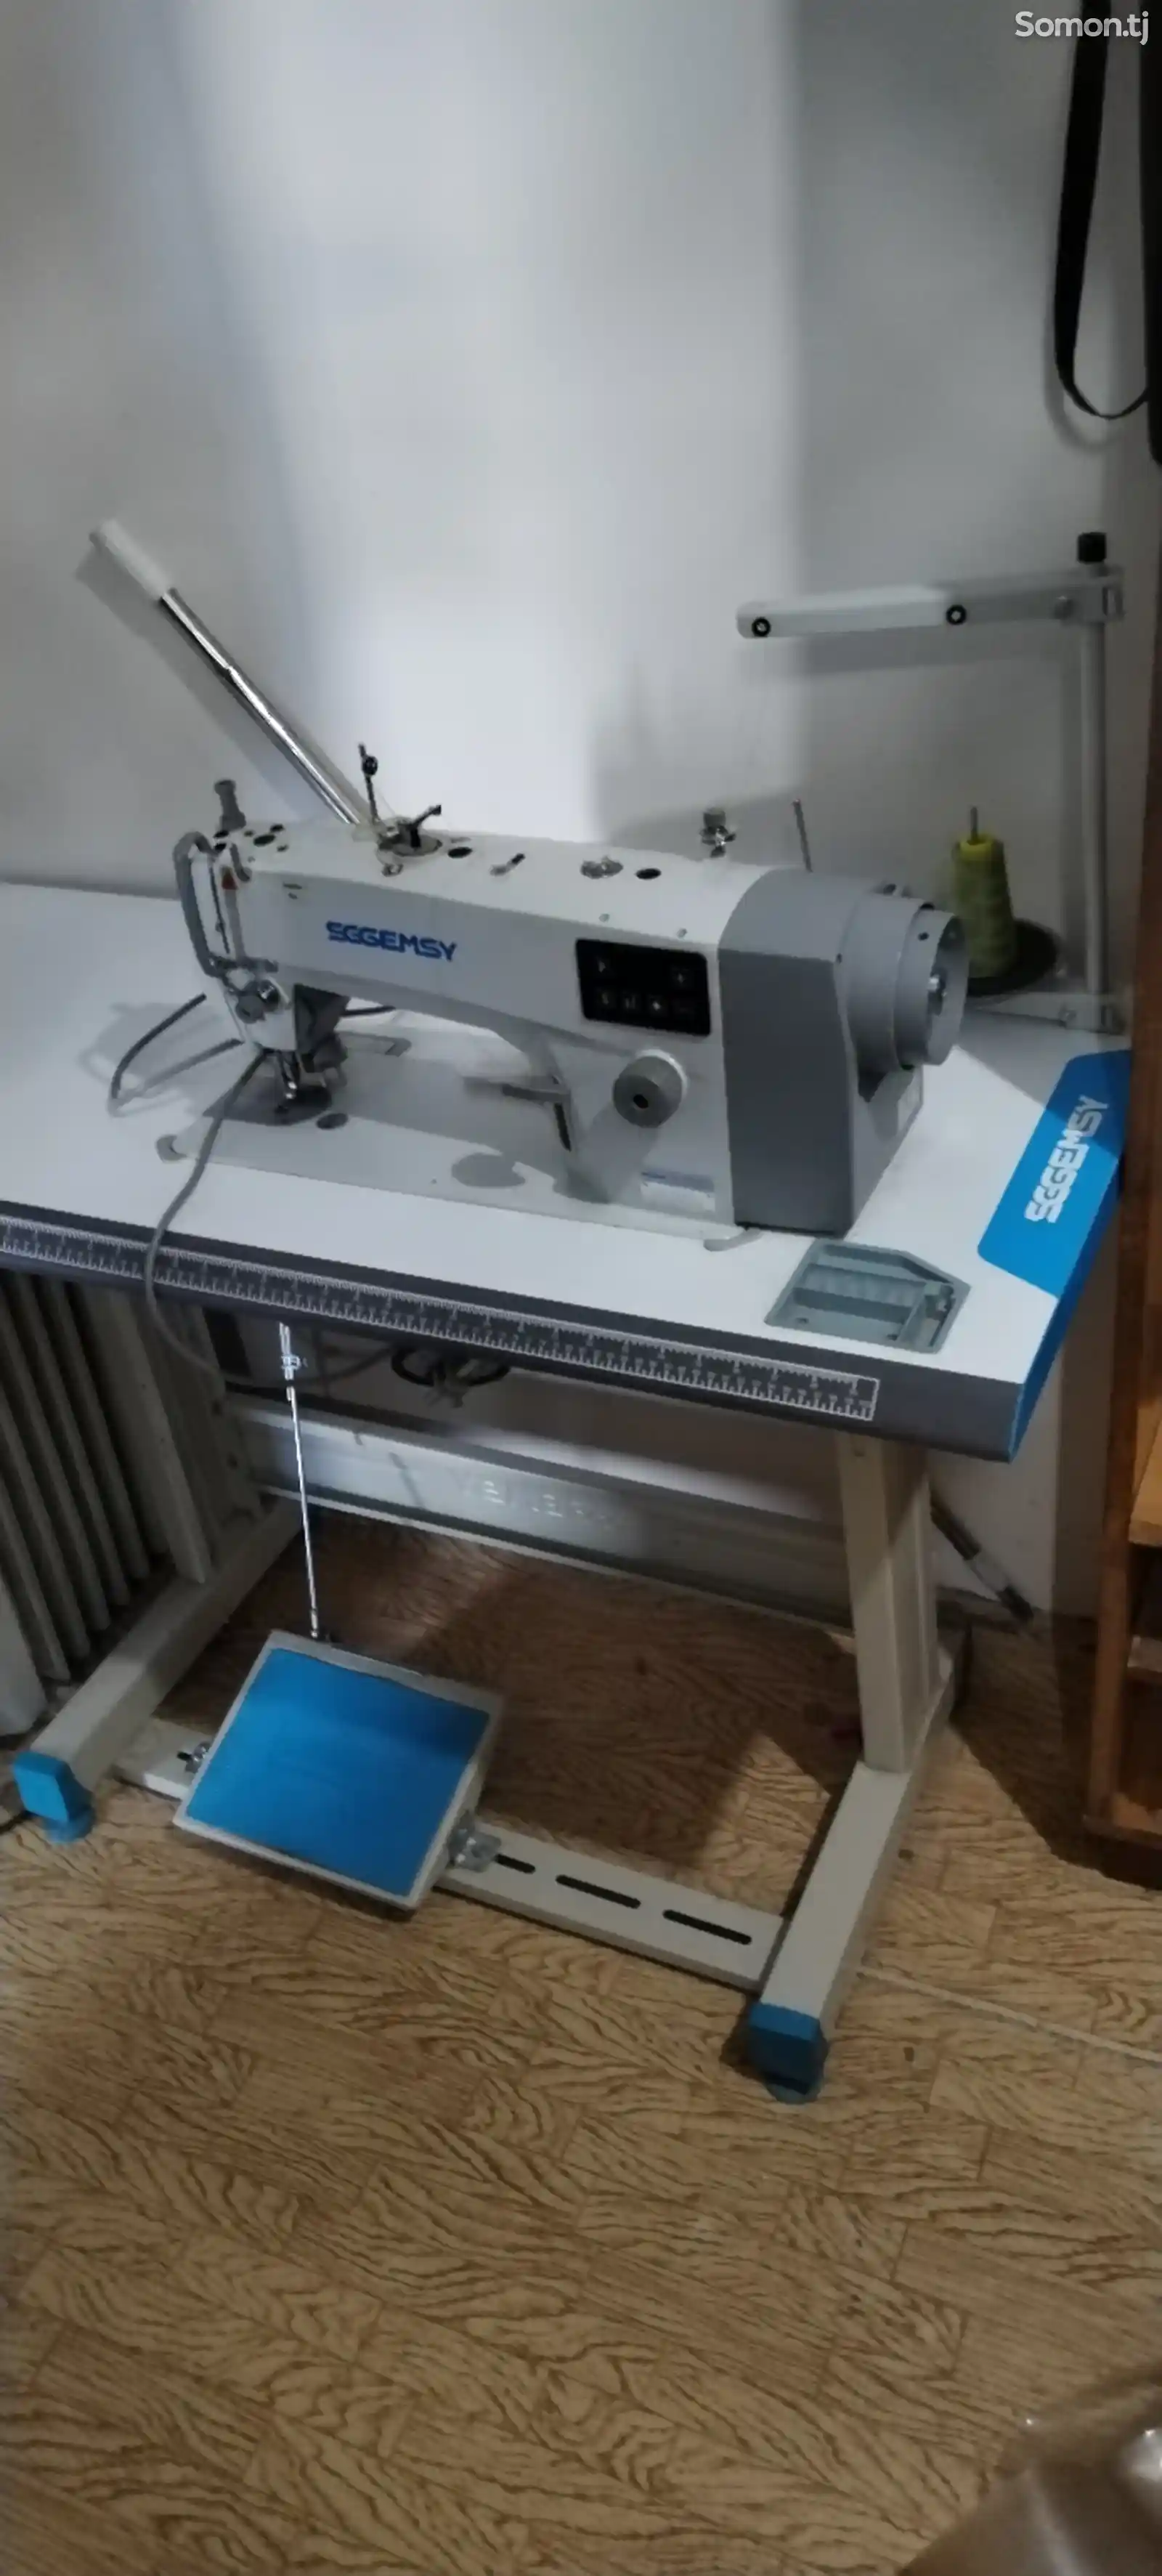 Швейная машина Sggemsy-2